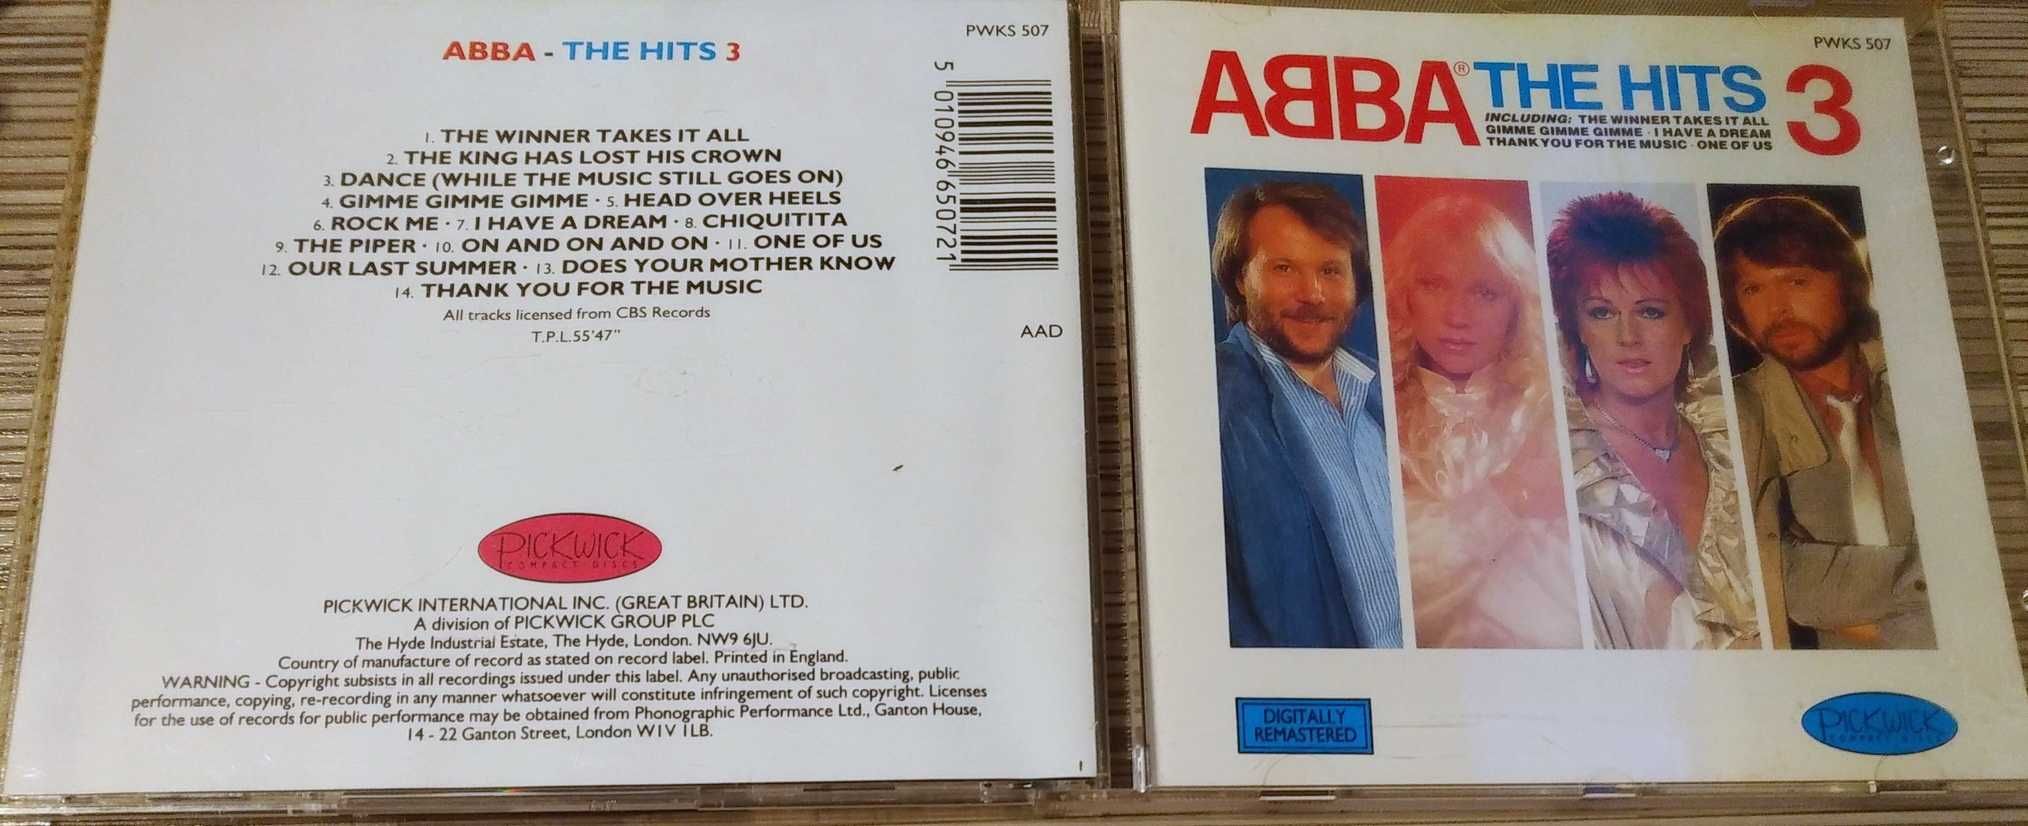 CD-Disco-Pop Abba/Bee Gees/Boney M/The Cure/Omd/DM /A-ha  etc